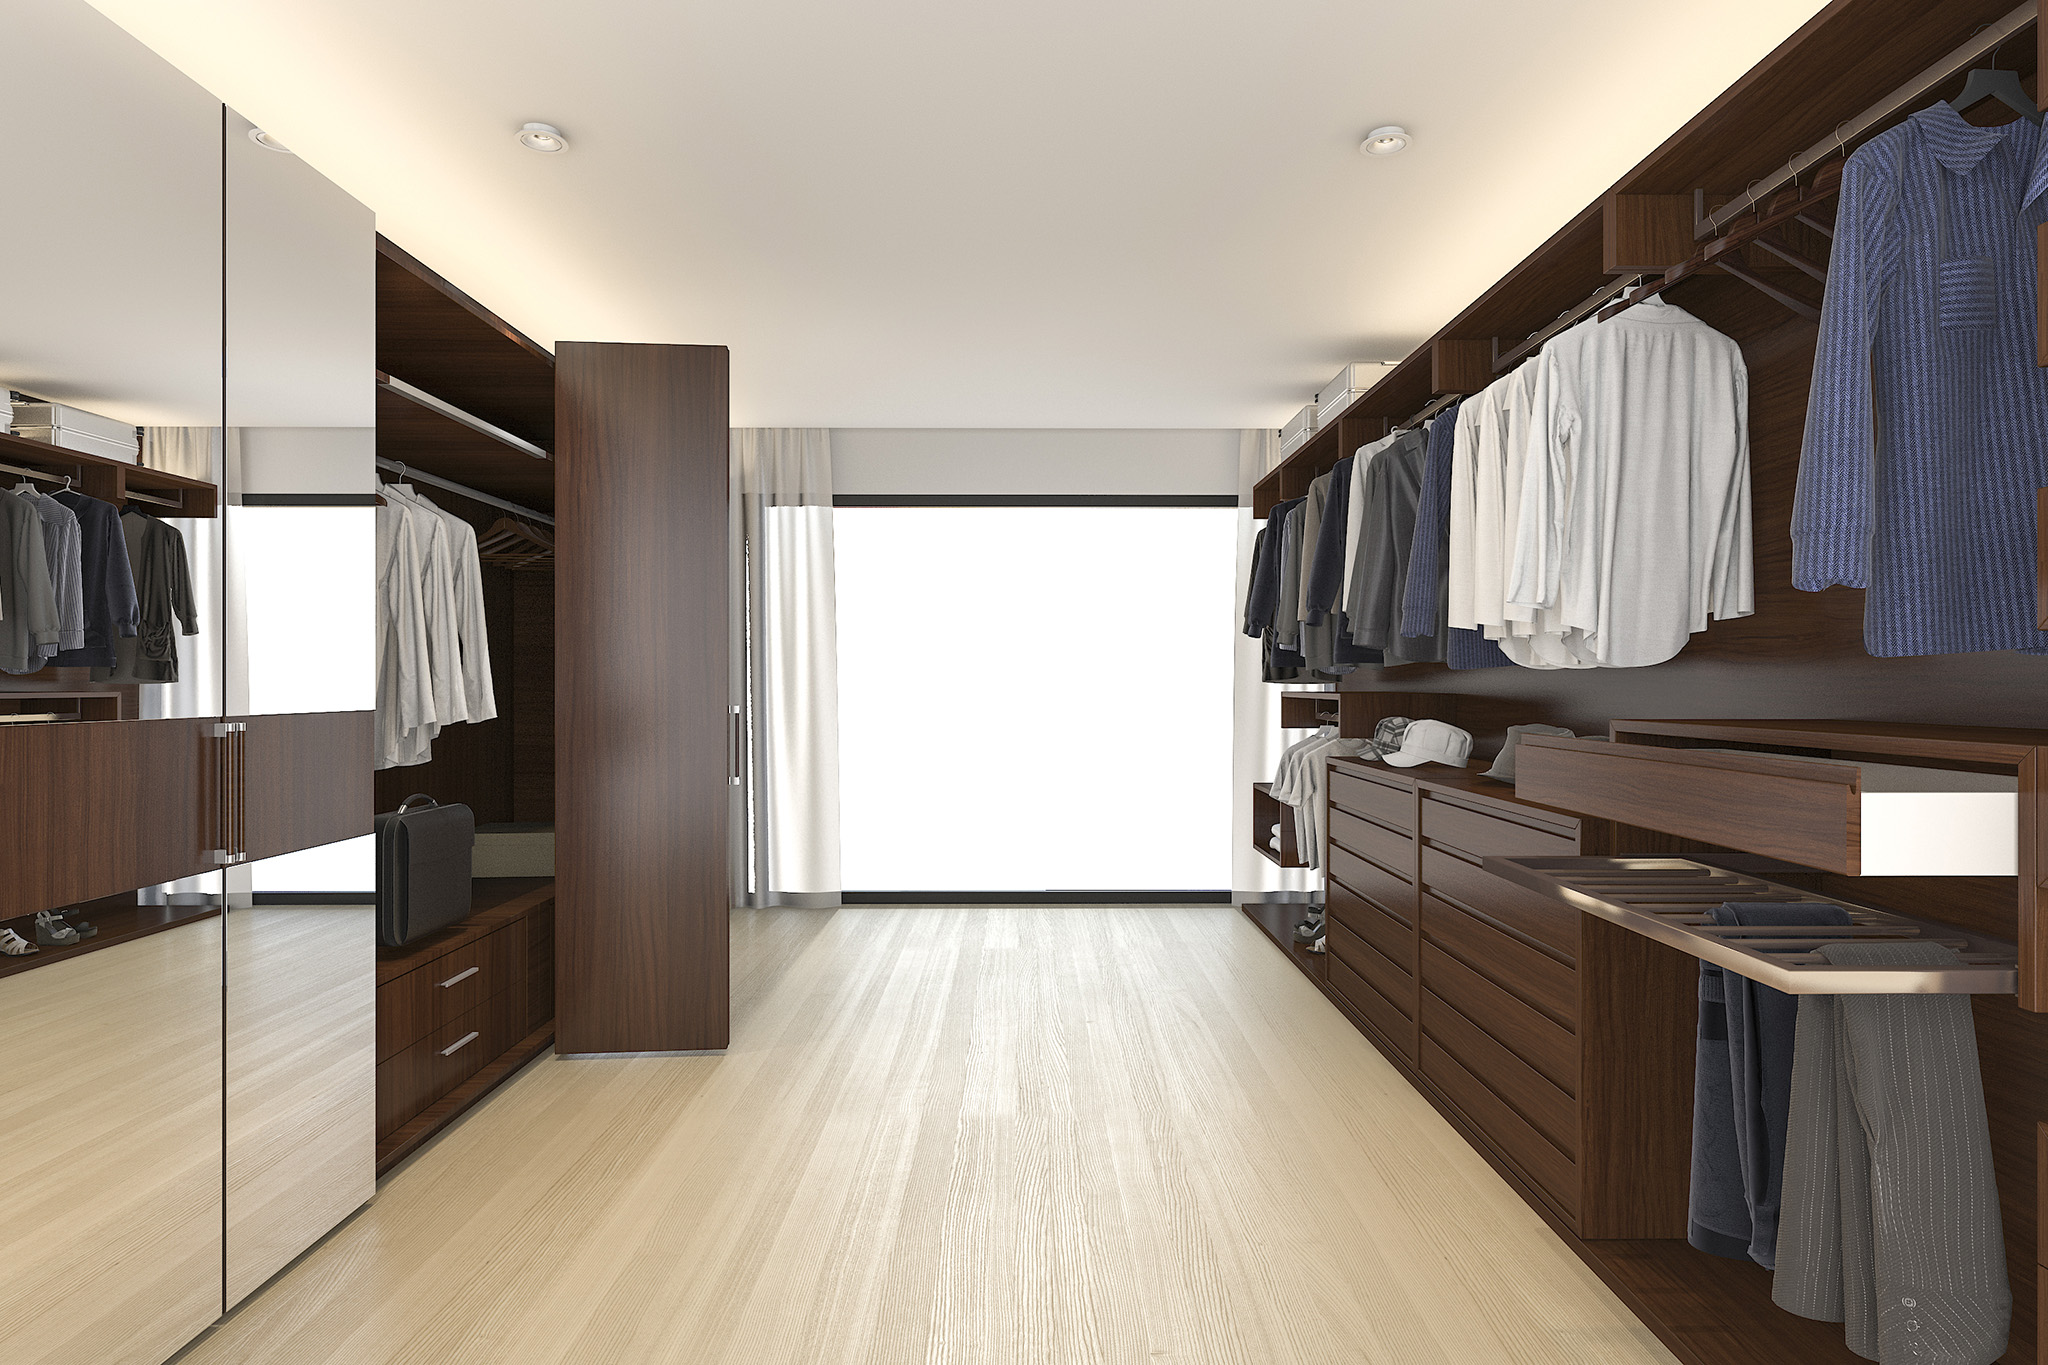 wardrobe storage ideas, wardrobe drawers, walk in wardrobe, mirrored wardrobe